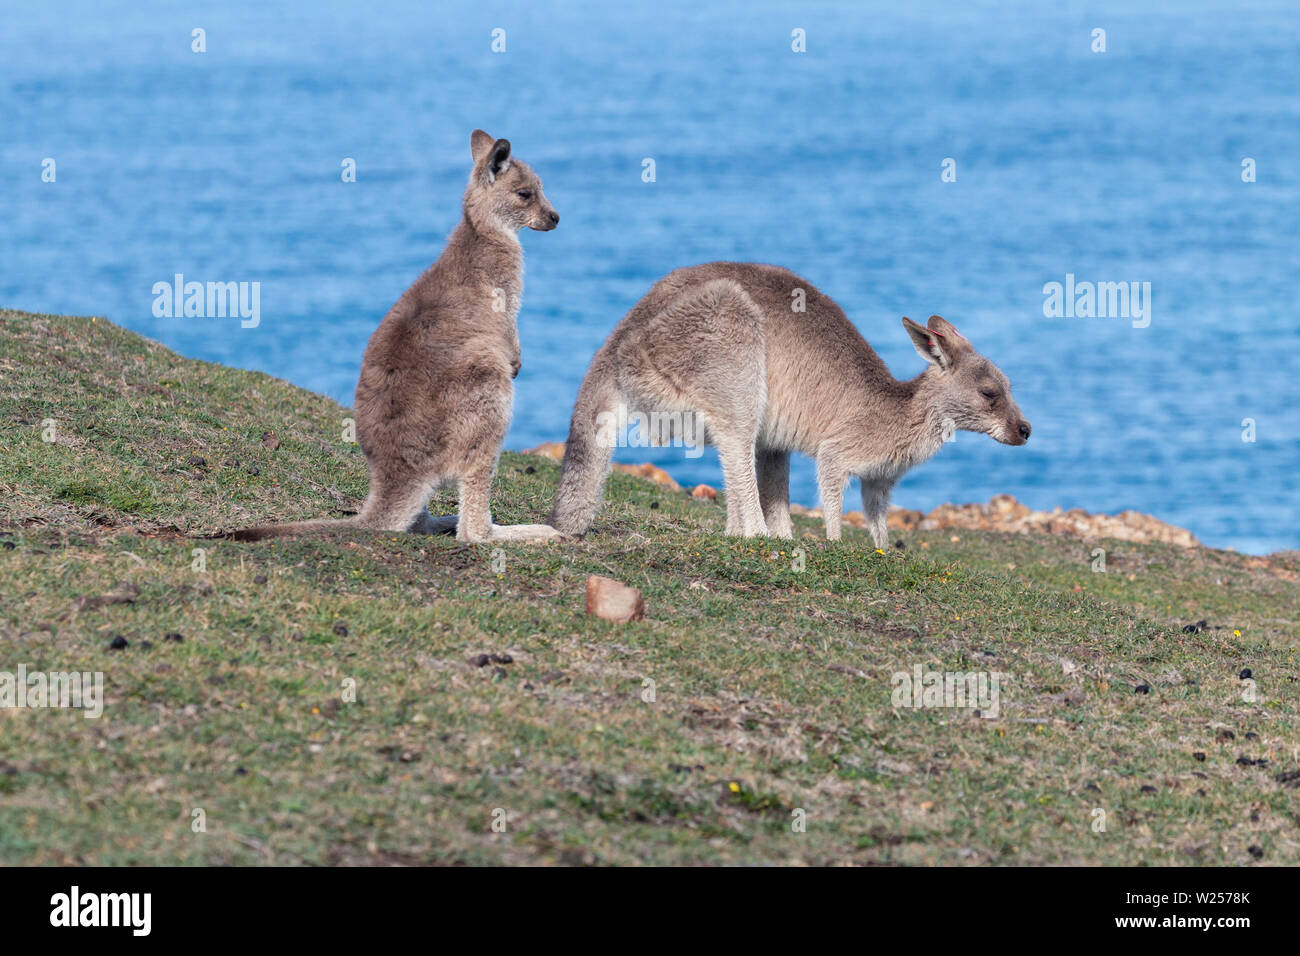 Eastern Grey Kangaroo June 3rd, 2019 Bongil Bongil National Park, Australia Stock Photo